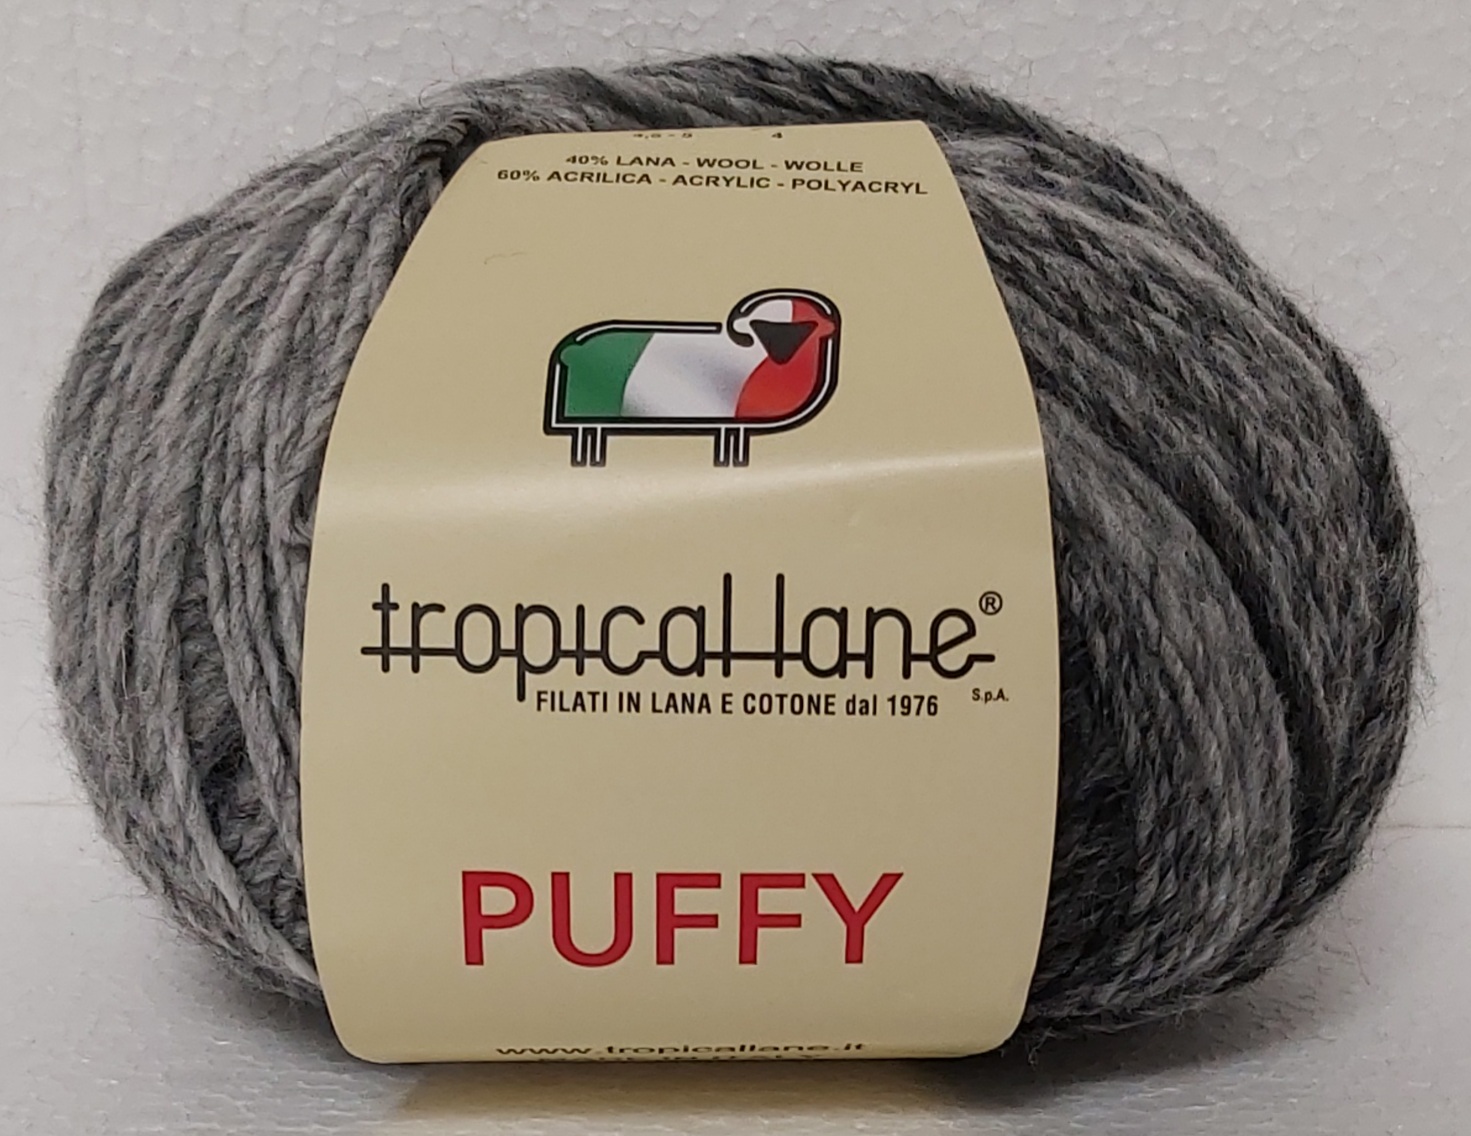 Puffy Tropical-lane 501